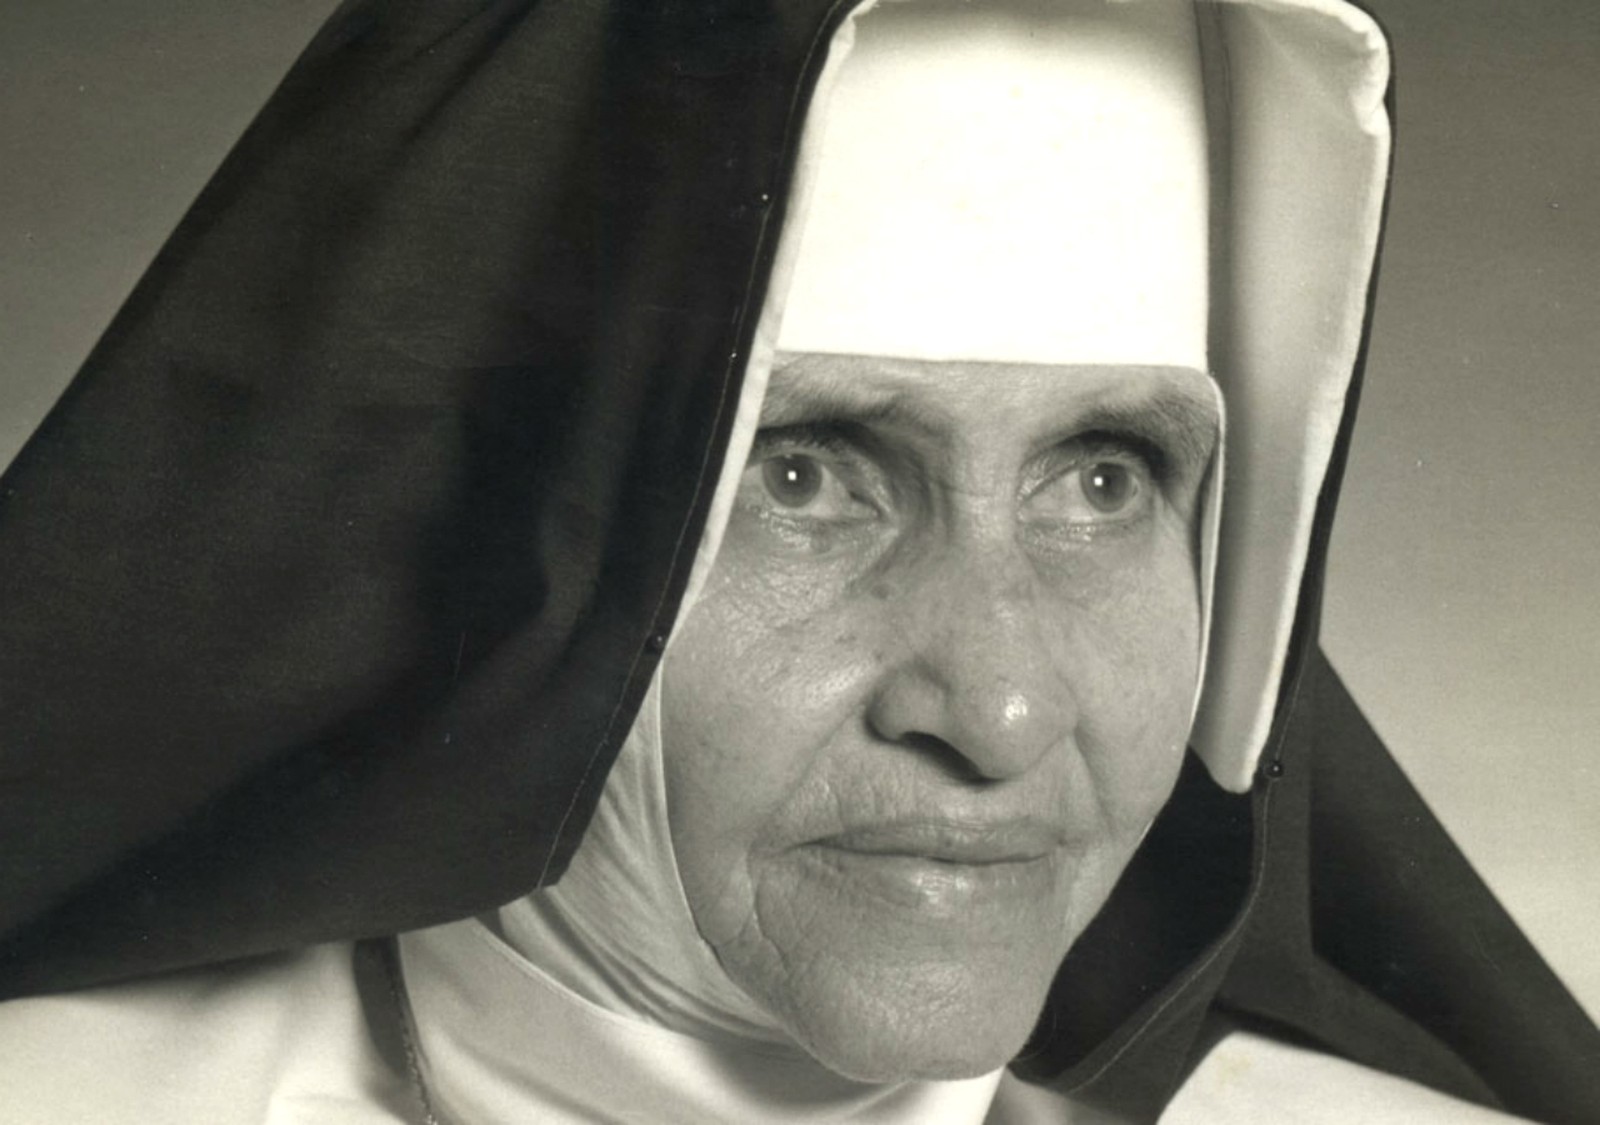 Irmã Dulce, a primeira santa nascida no Brasil